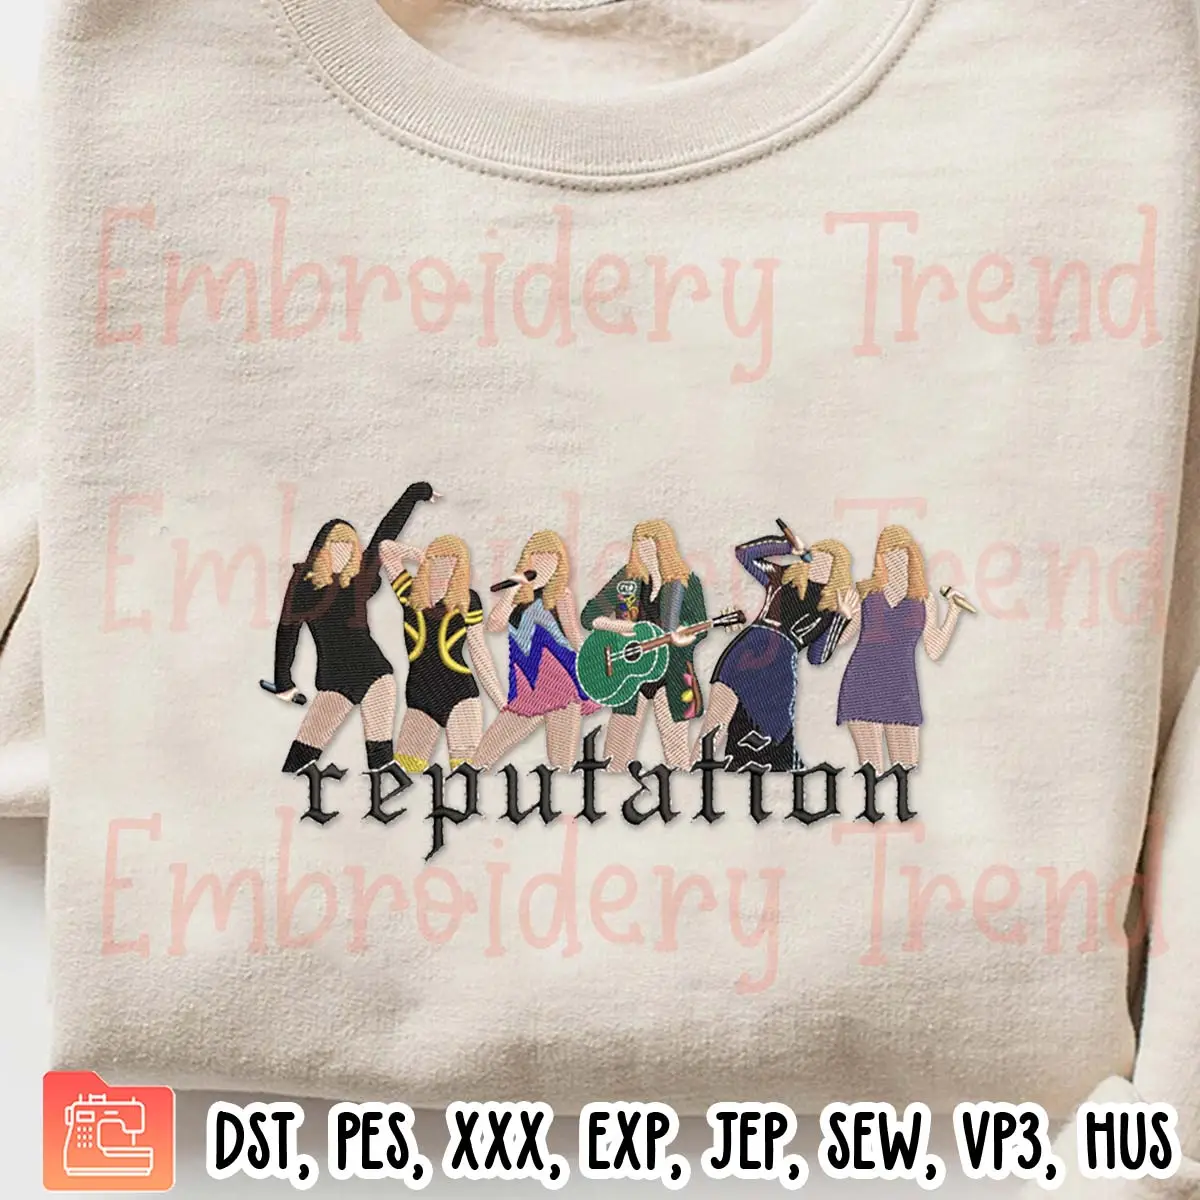 Taylor Swift Reputation Tour Embroidery Design, Era Tour Embroidery Digitizing Pes File